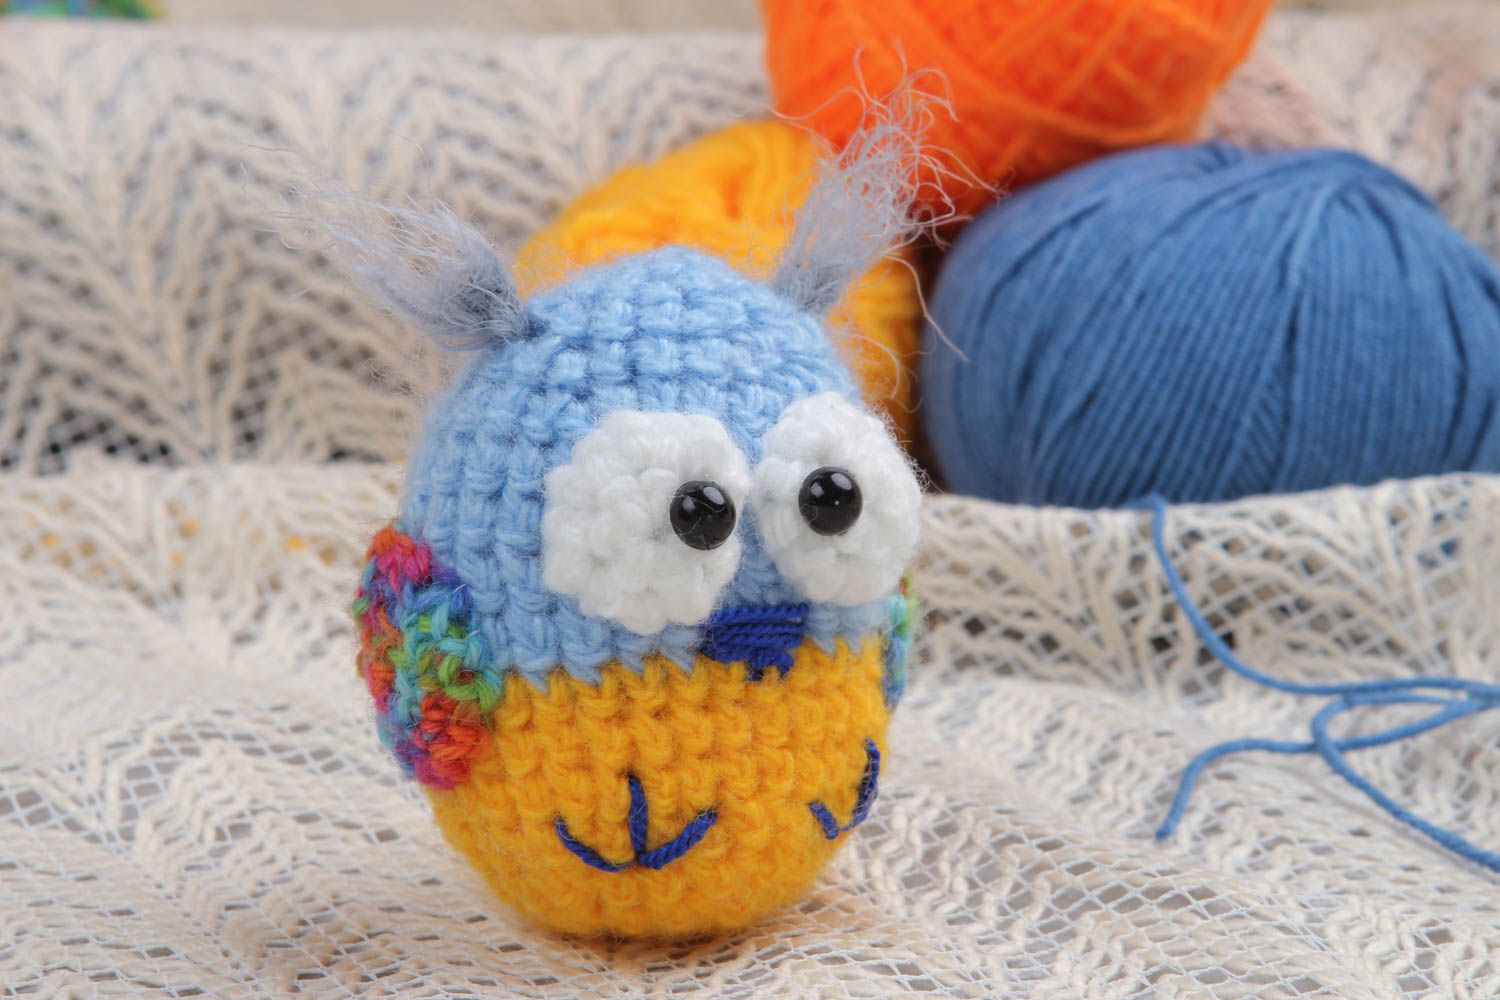 Beautiful handmade crochet soft toy stuffed toy birthday gift ideas small gifts photo 1